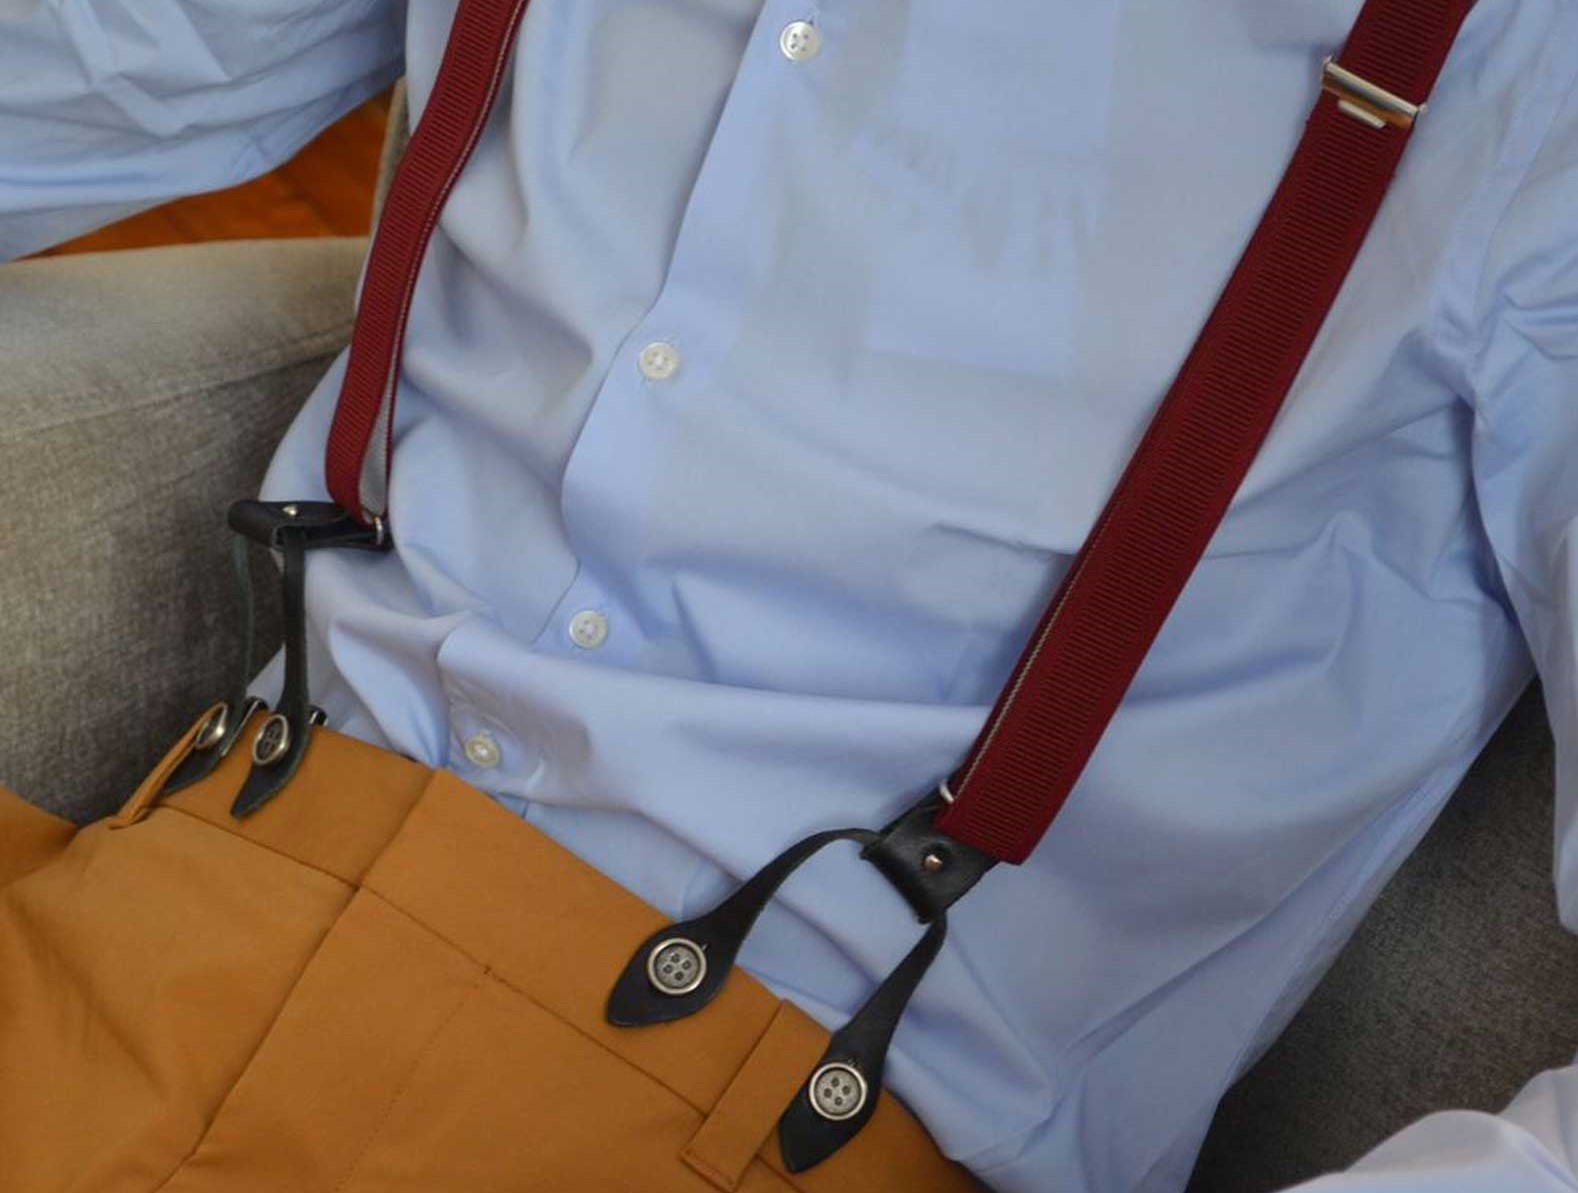 Suspenders - Button